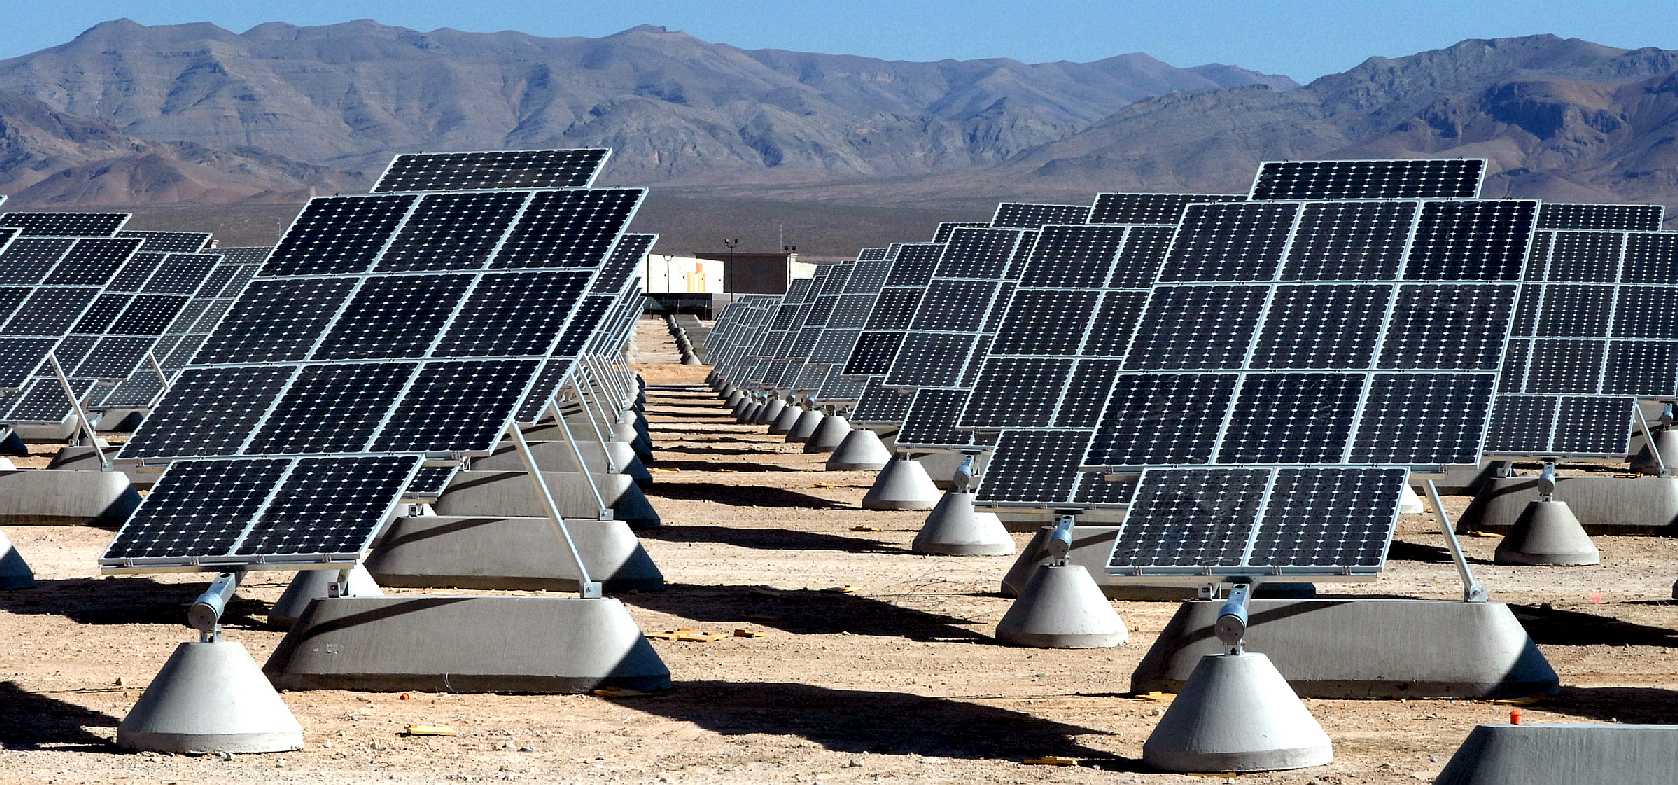 Solar farm generating electricity at Nevada, USA